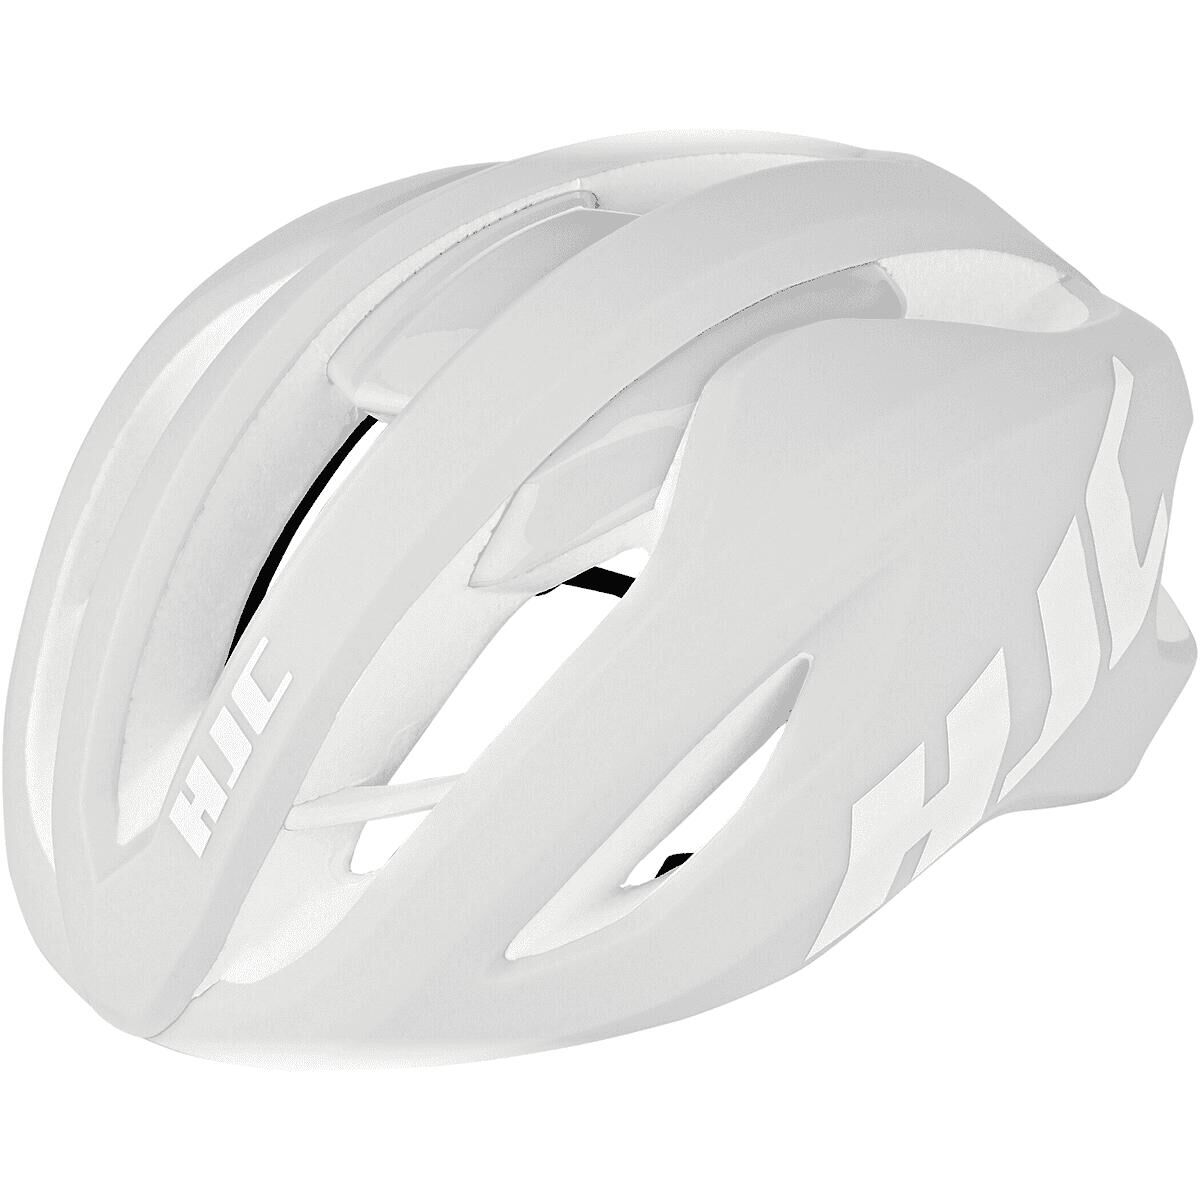 HJC HJC Veleco: Streamlined, Comfy Helmet for Road Cycling